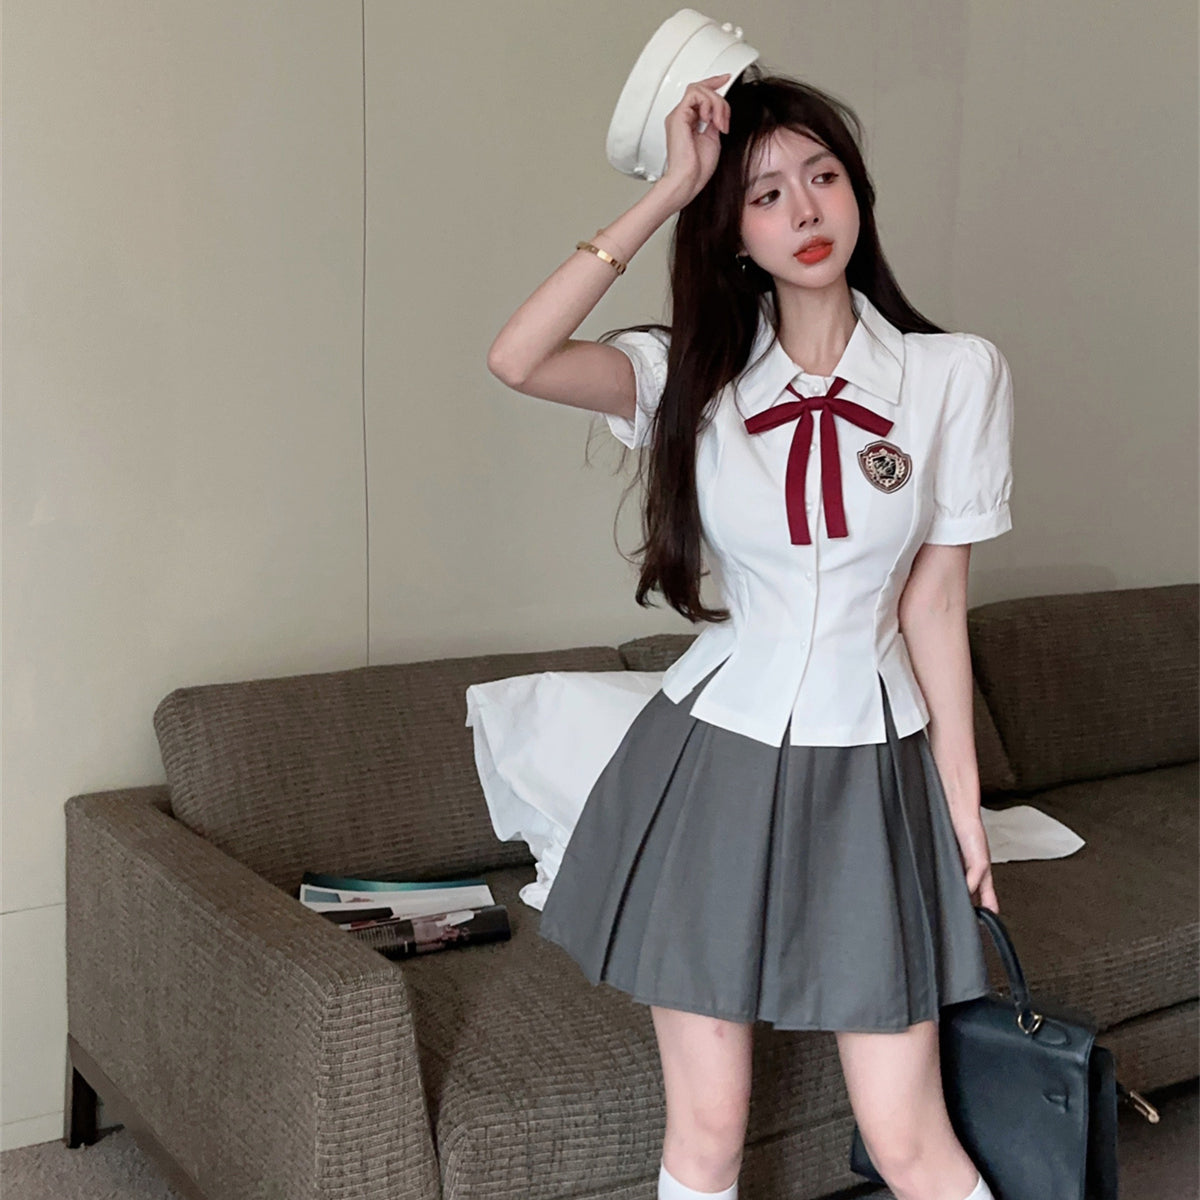 Spice girl jk college style shirt + skirt A40713